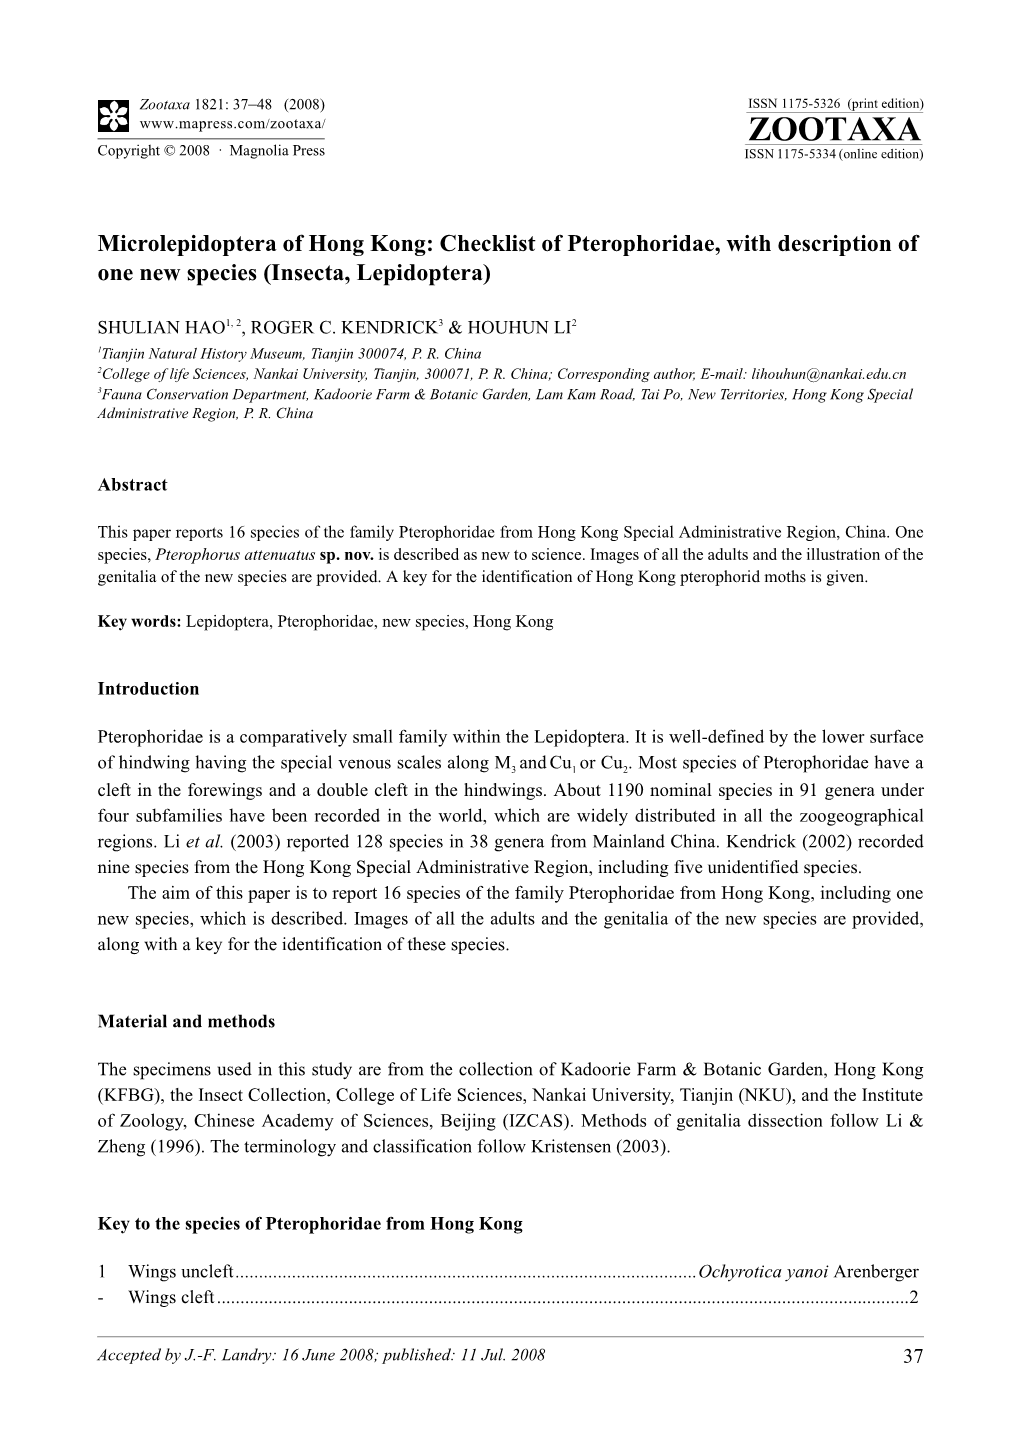 Zootaxa, Microlepidoptera of Hong Kong: Checklist of Pterophoridae